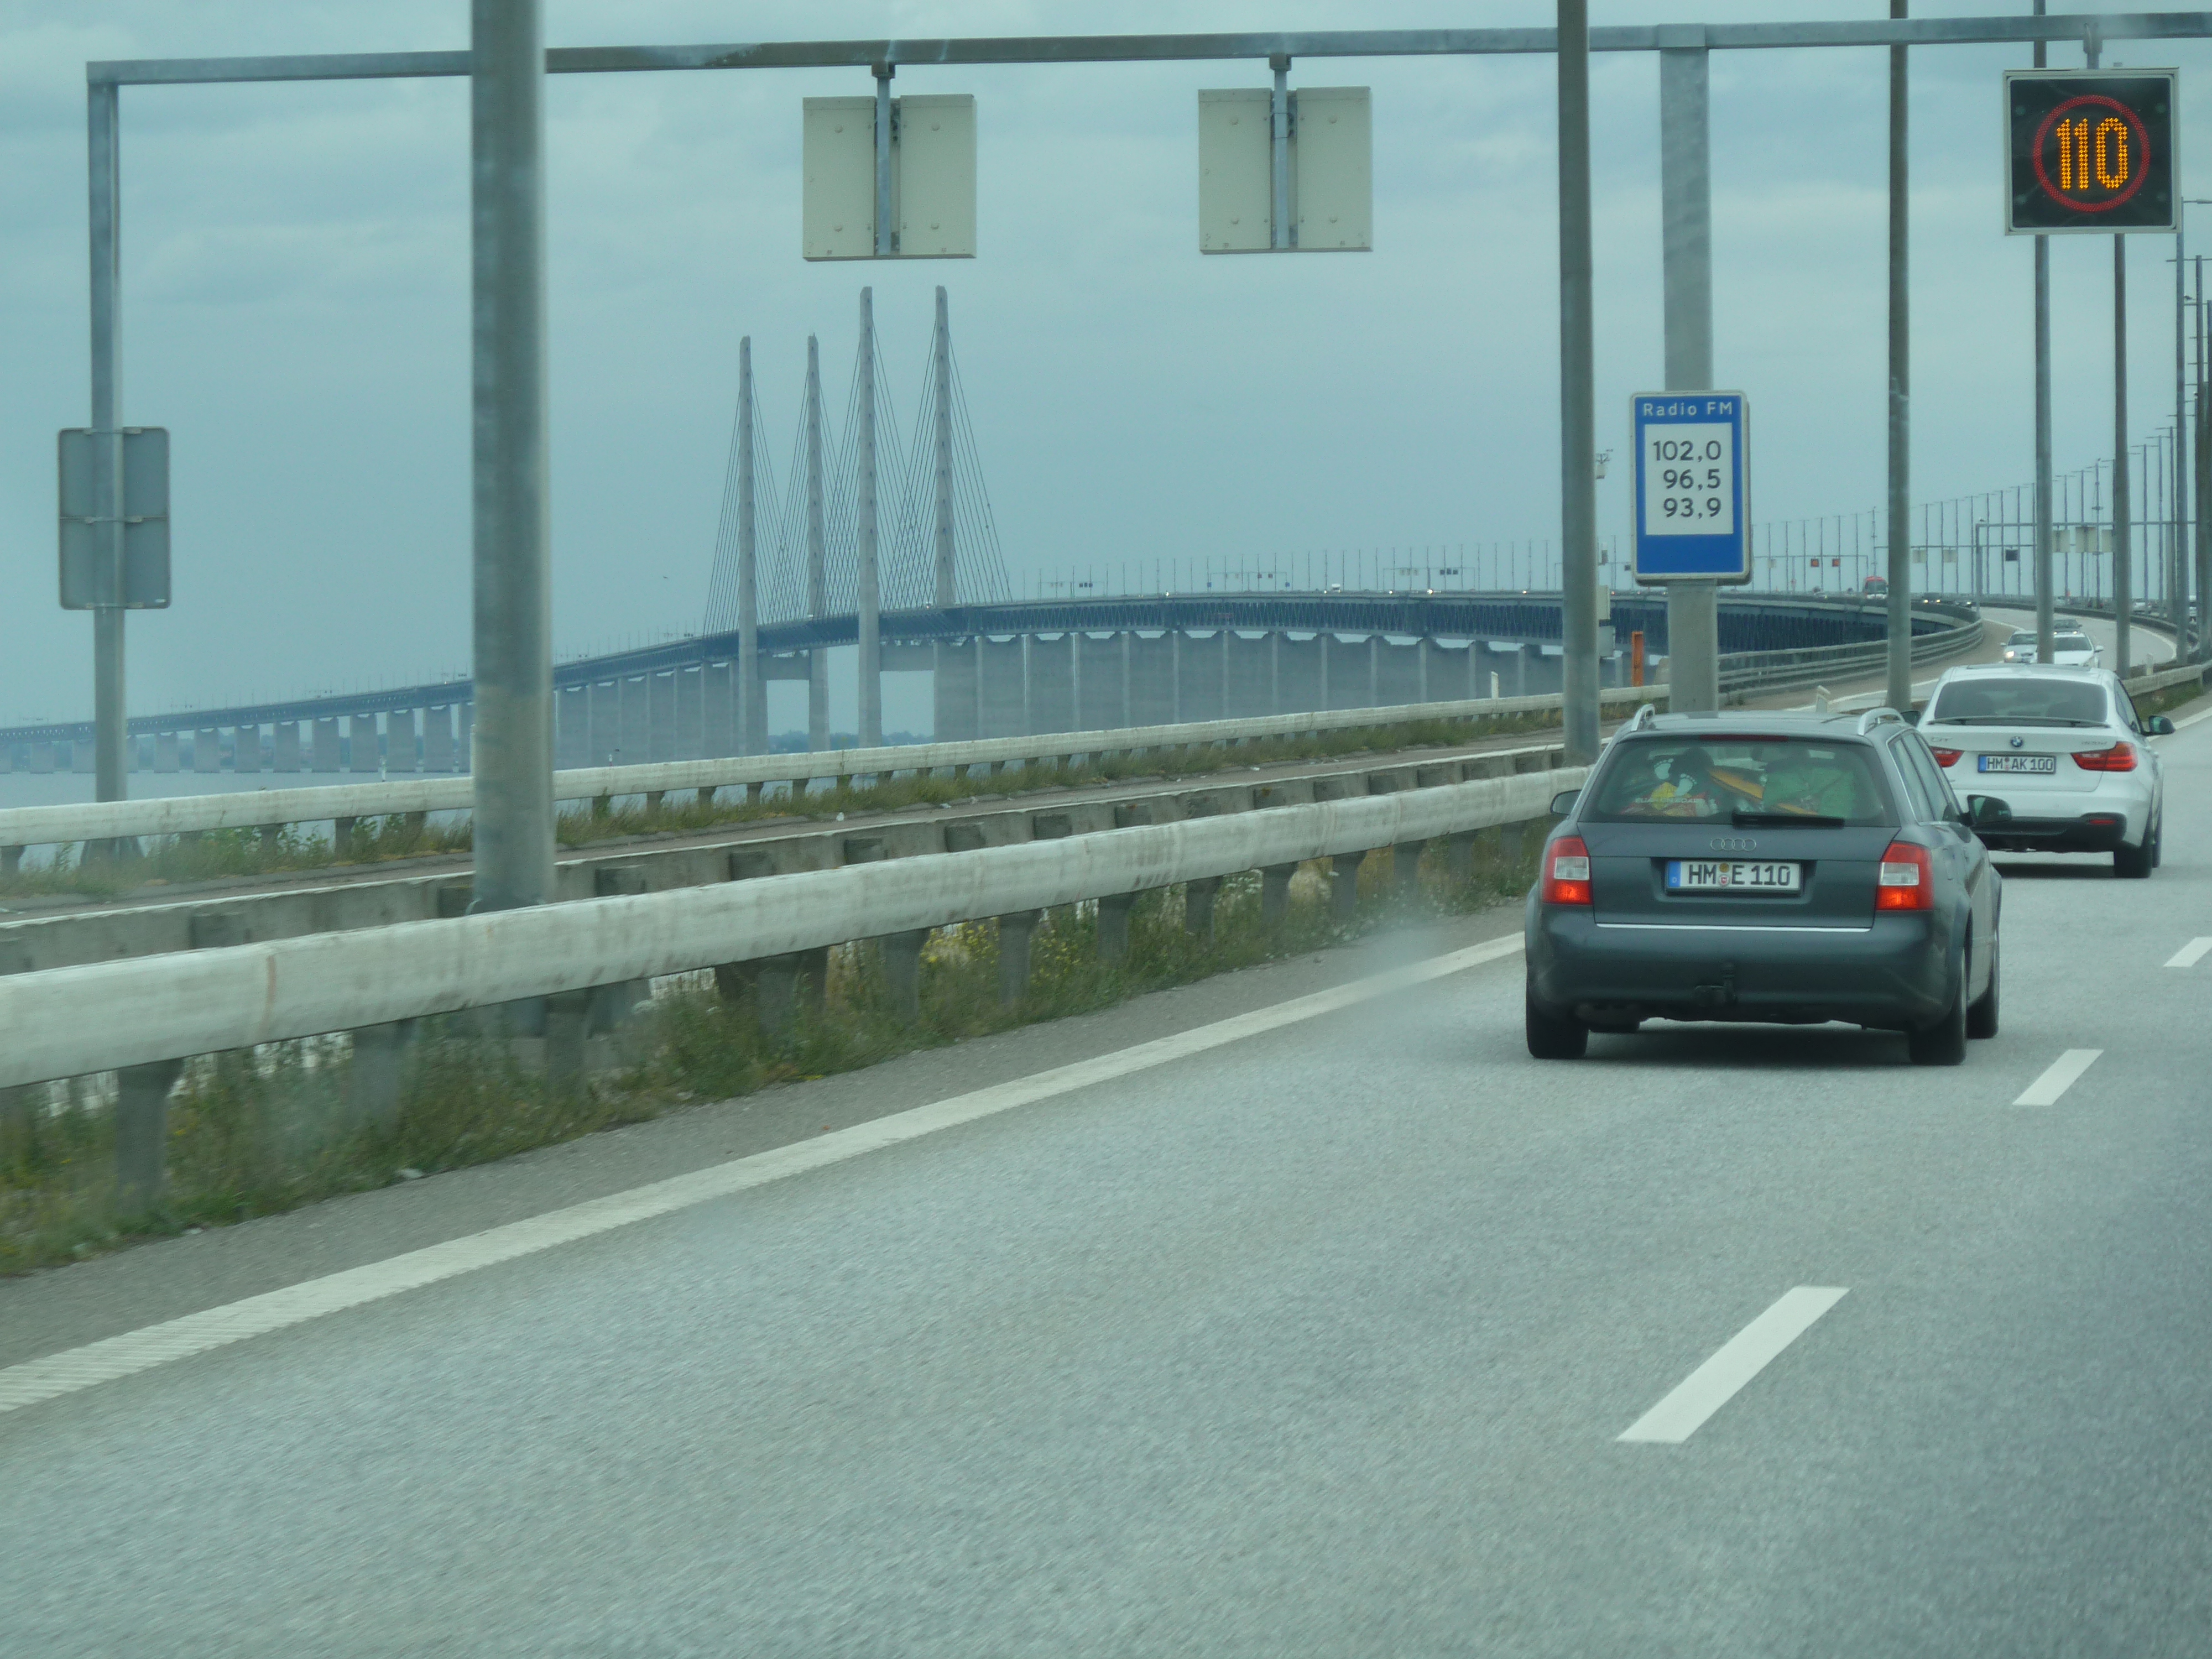 Øresund bridge